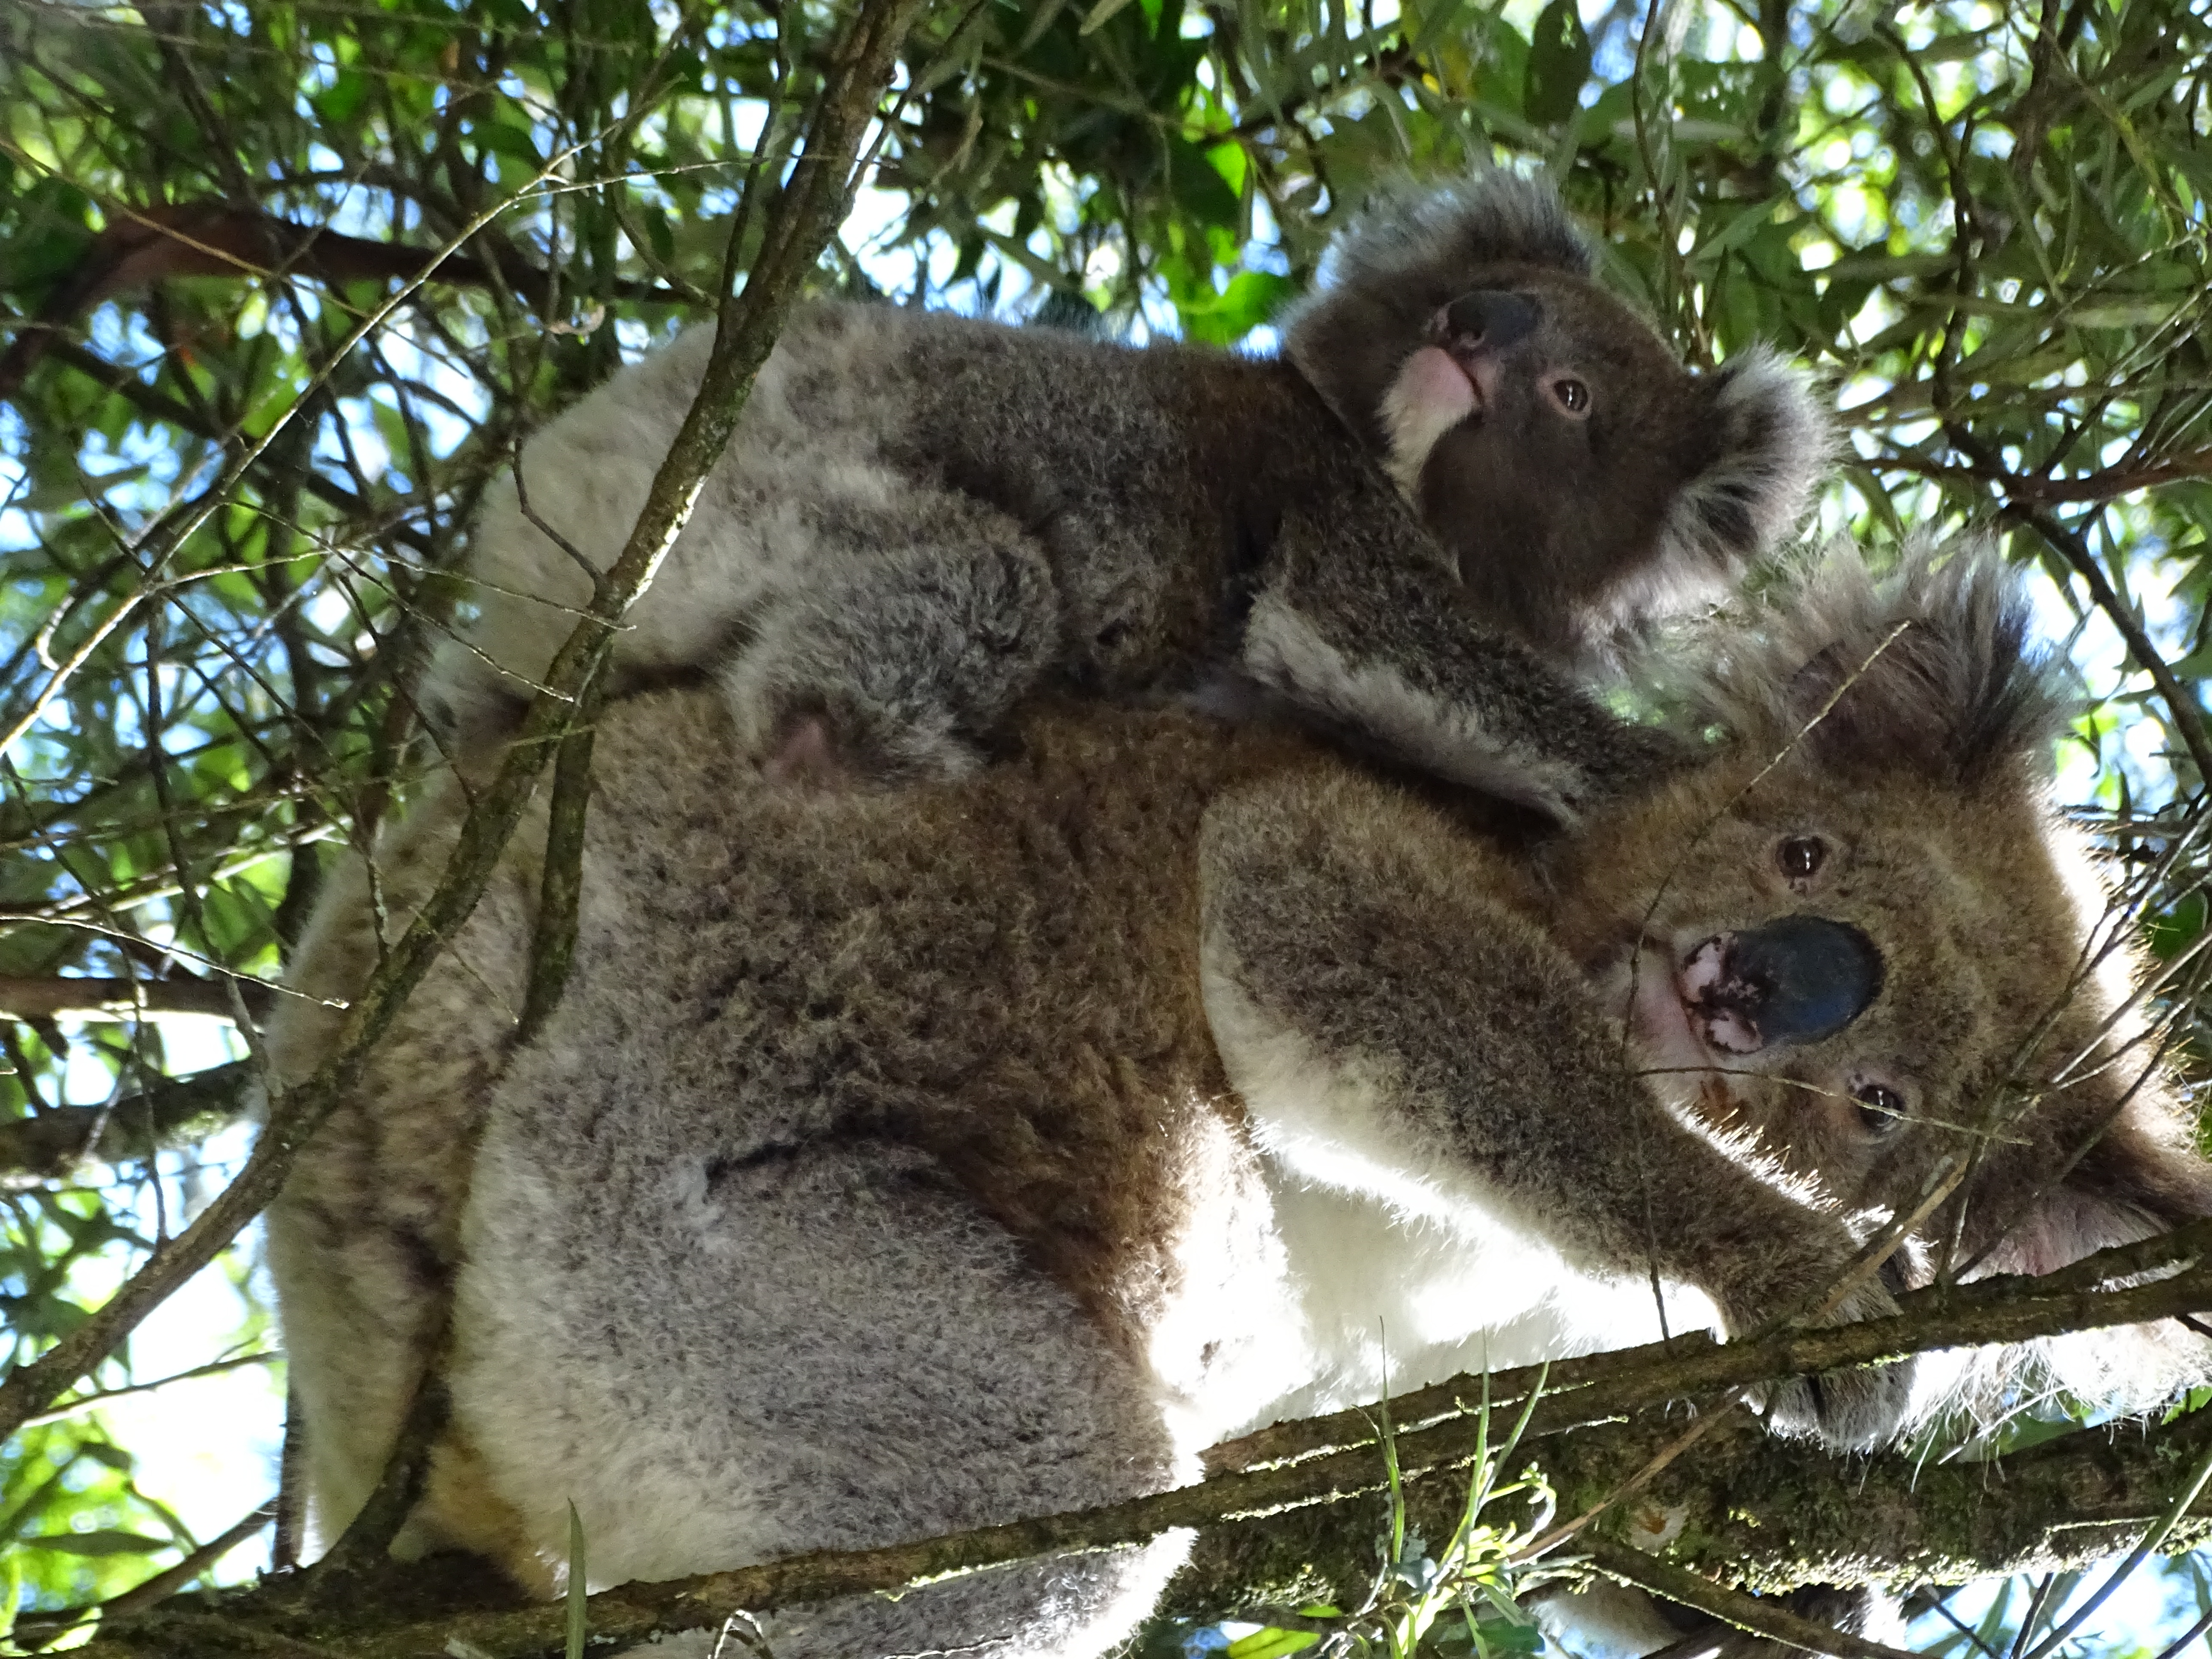 Макака коалу. Коалиха. Коала на спине у мамы. Коала обхватывает дерево. Загадка про коалу.